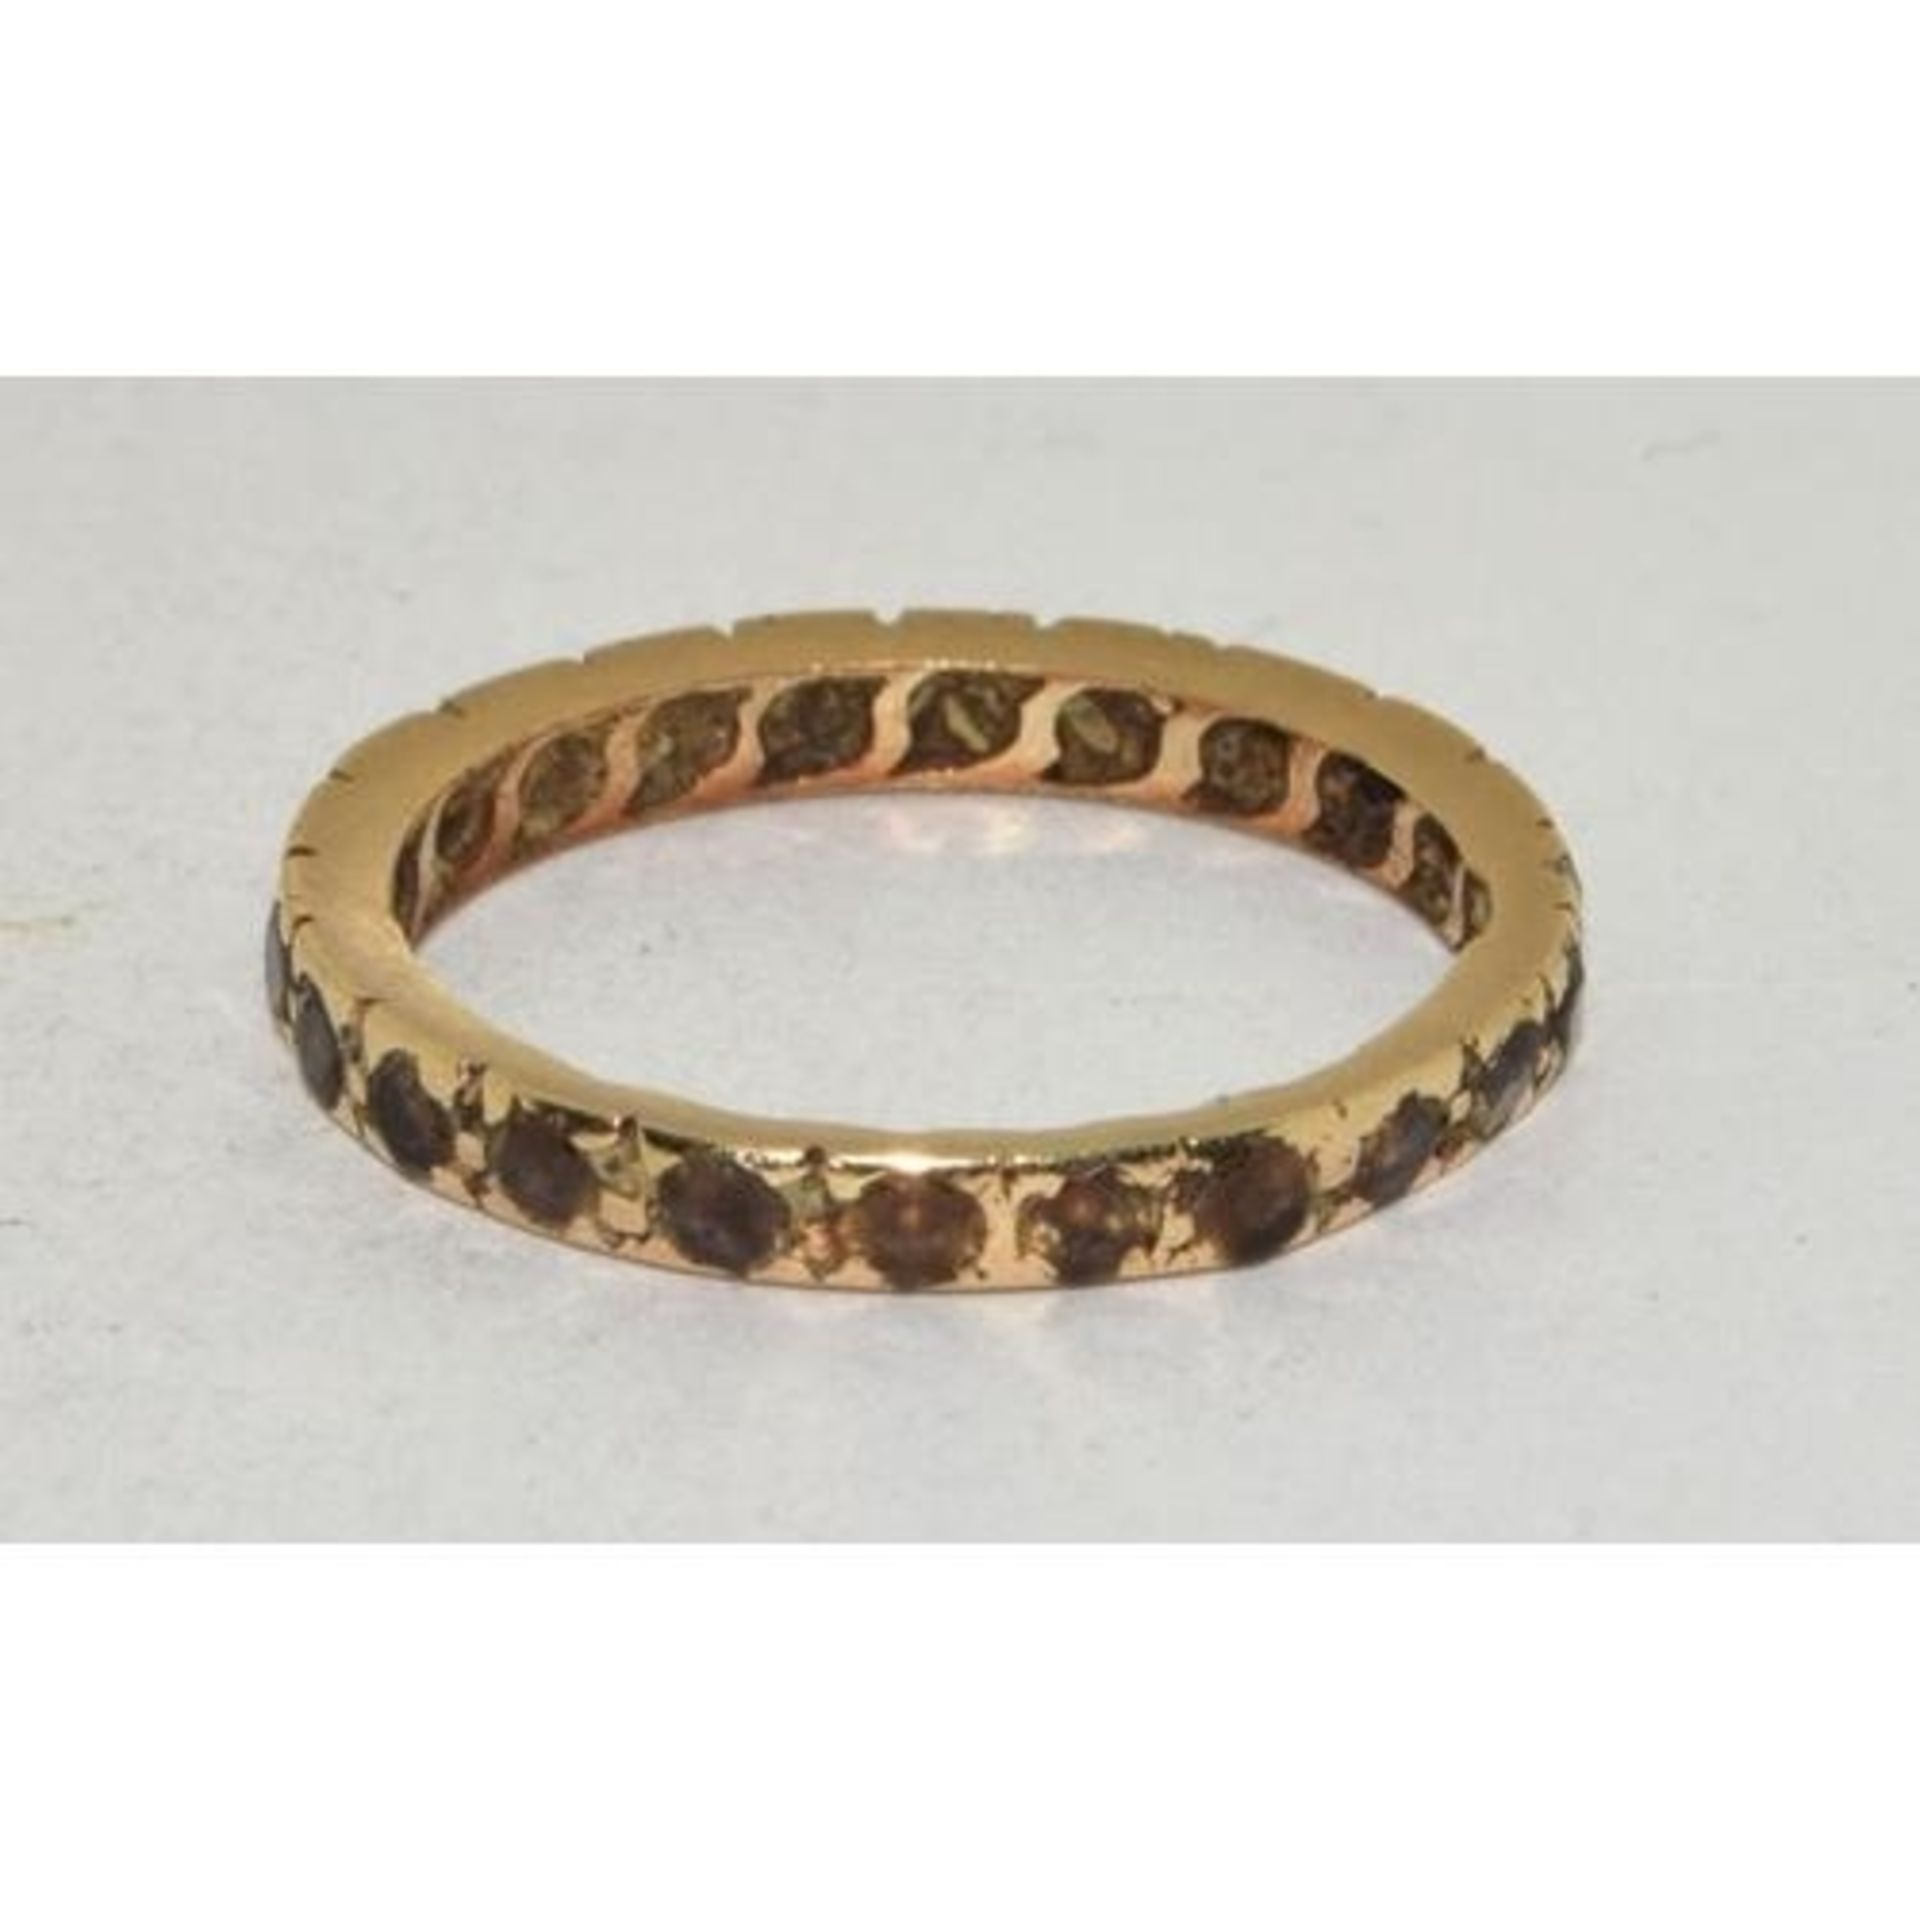 9ct gold garnet ladies full eternity ring size L - Image 2 of 3